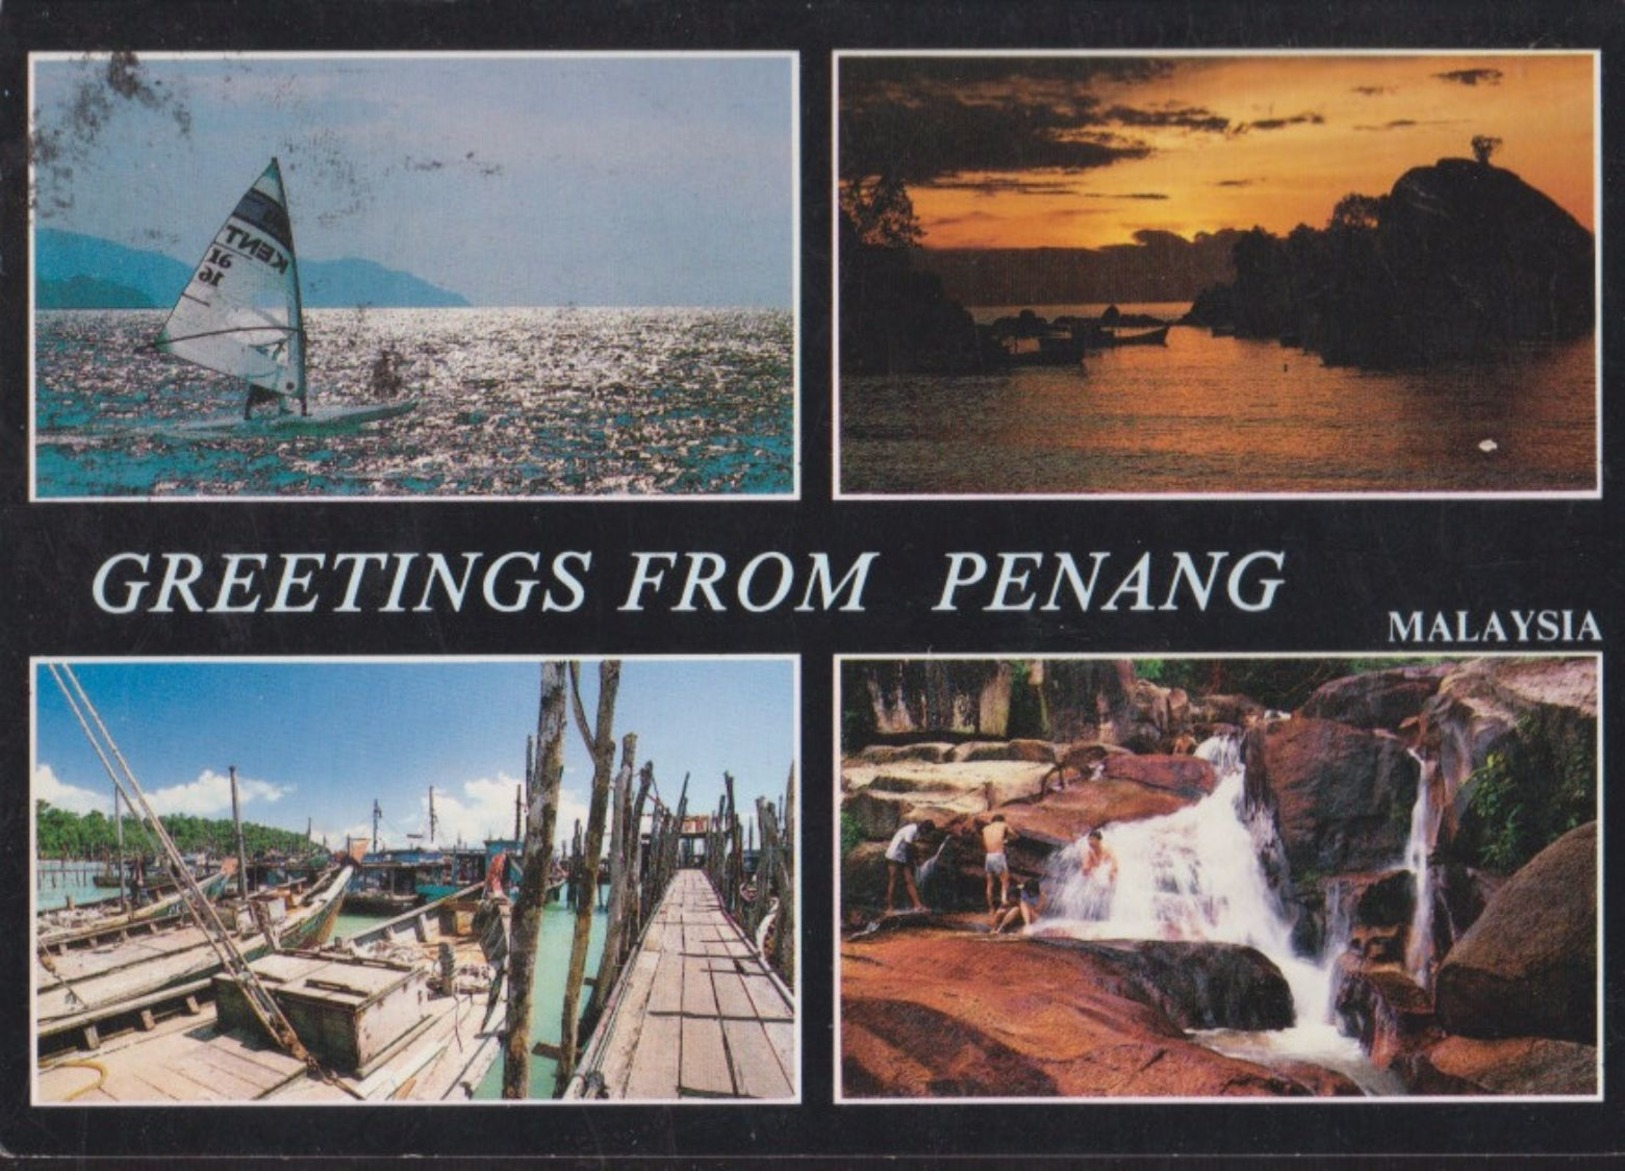 GREETINGS FROM PENANG - Malaysia